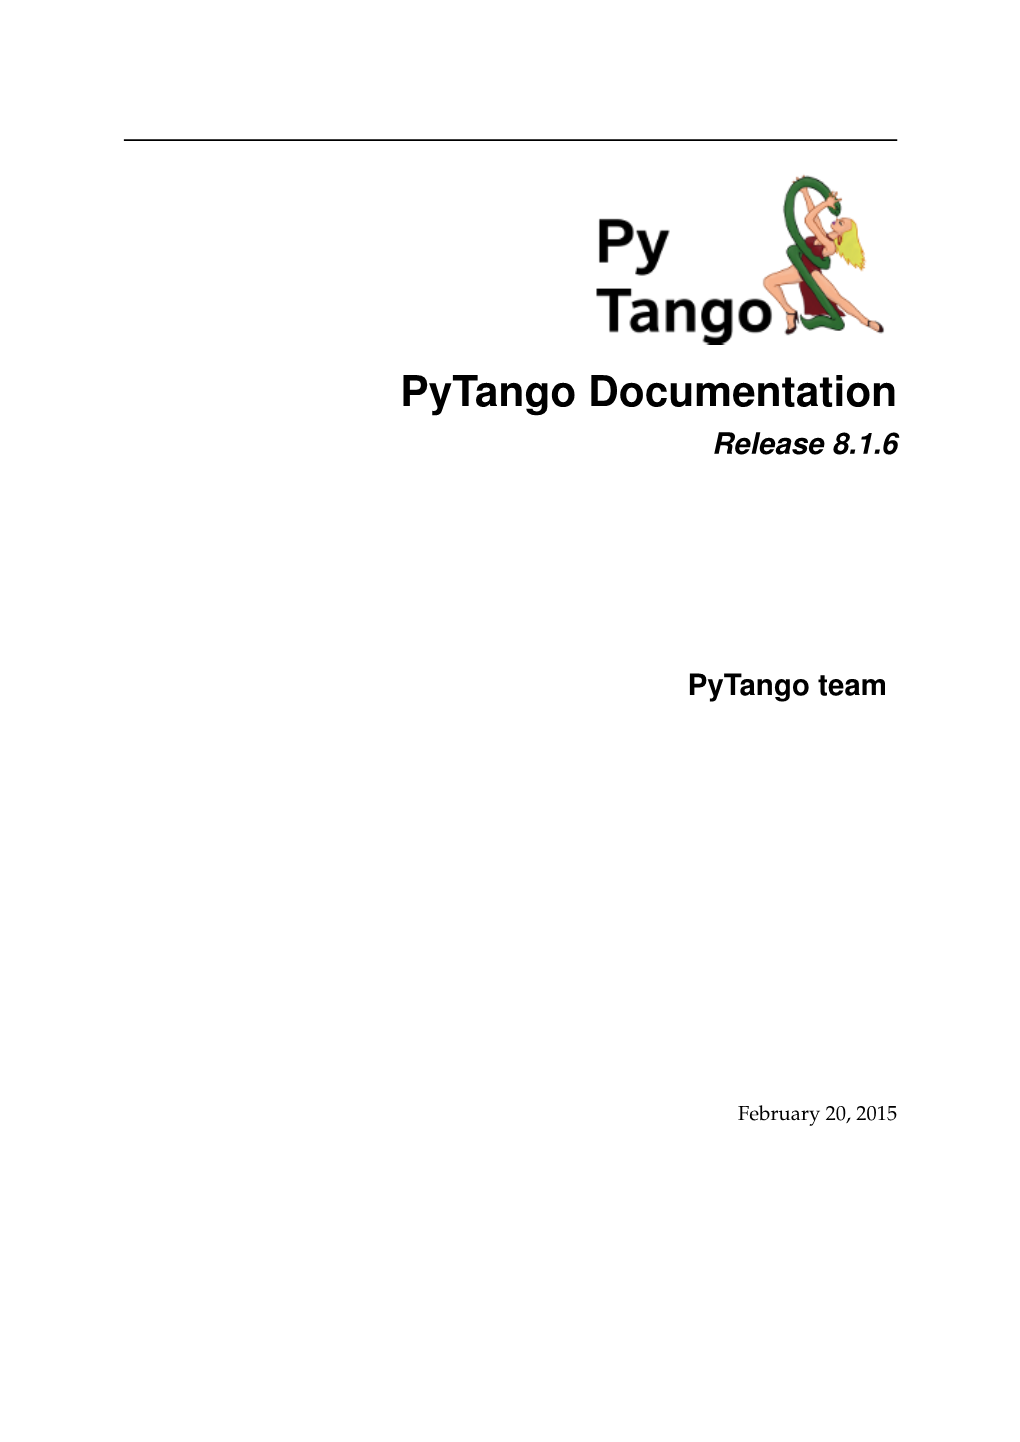 Pytango Documentation Release 8.1.6